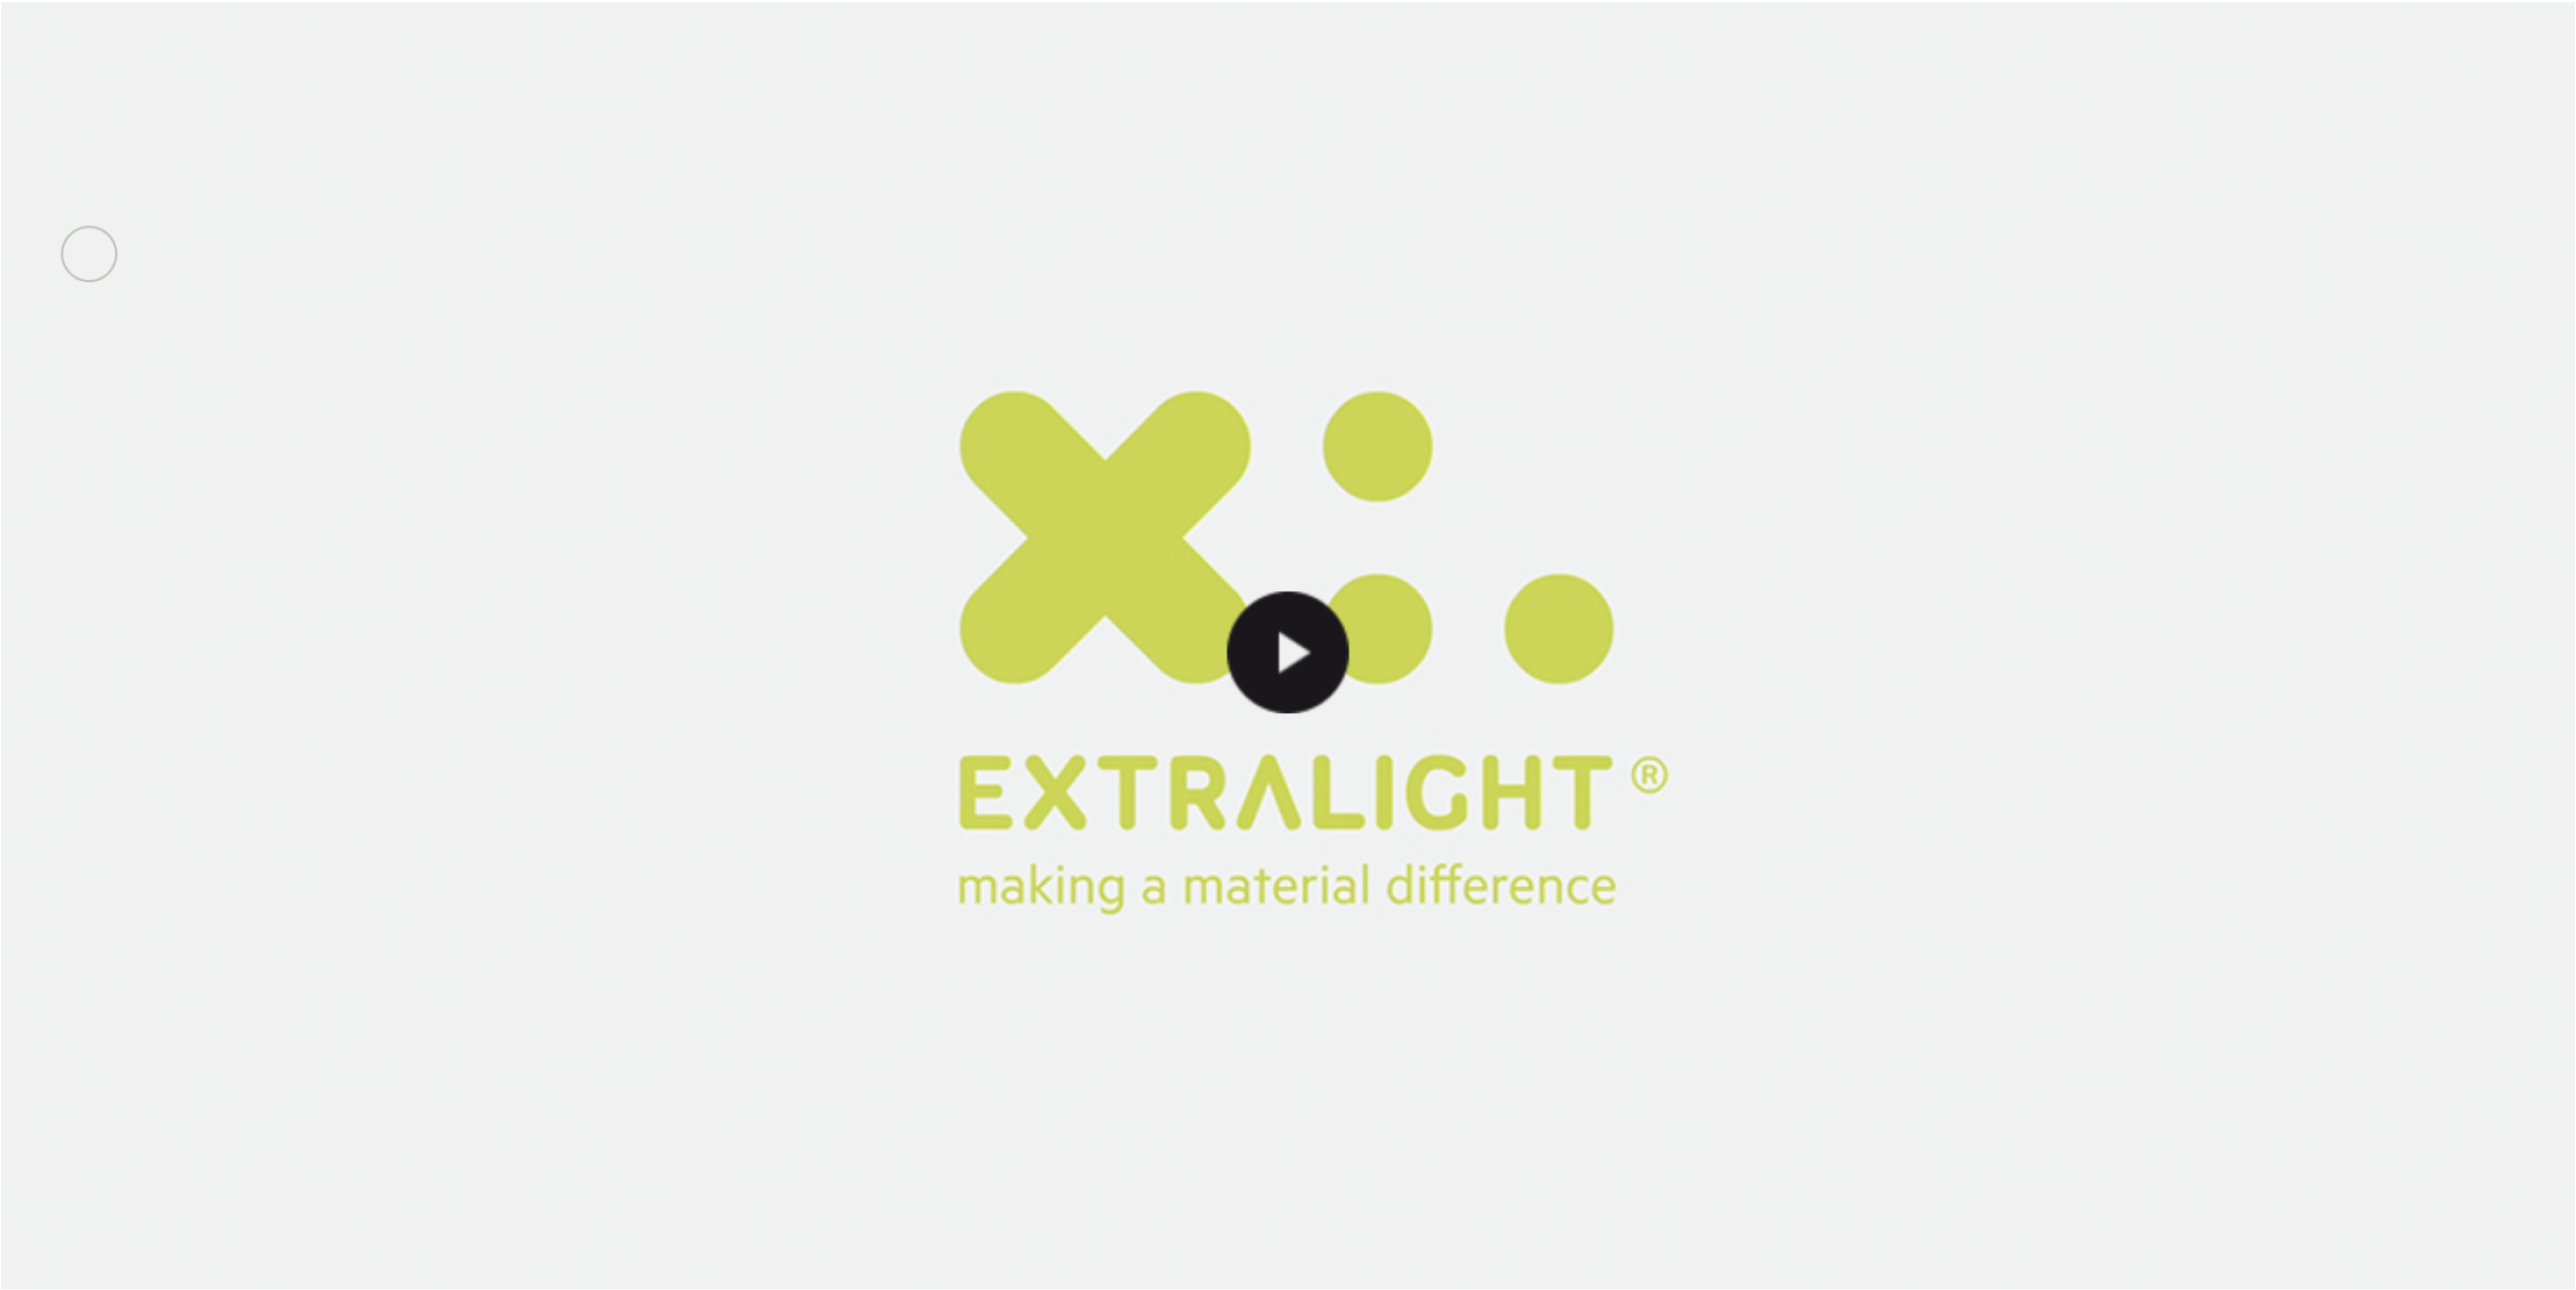 XL TM/XL Axiata Logo History - YouTube